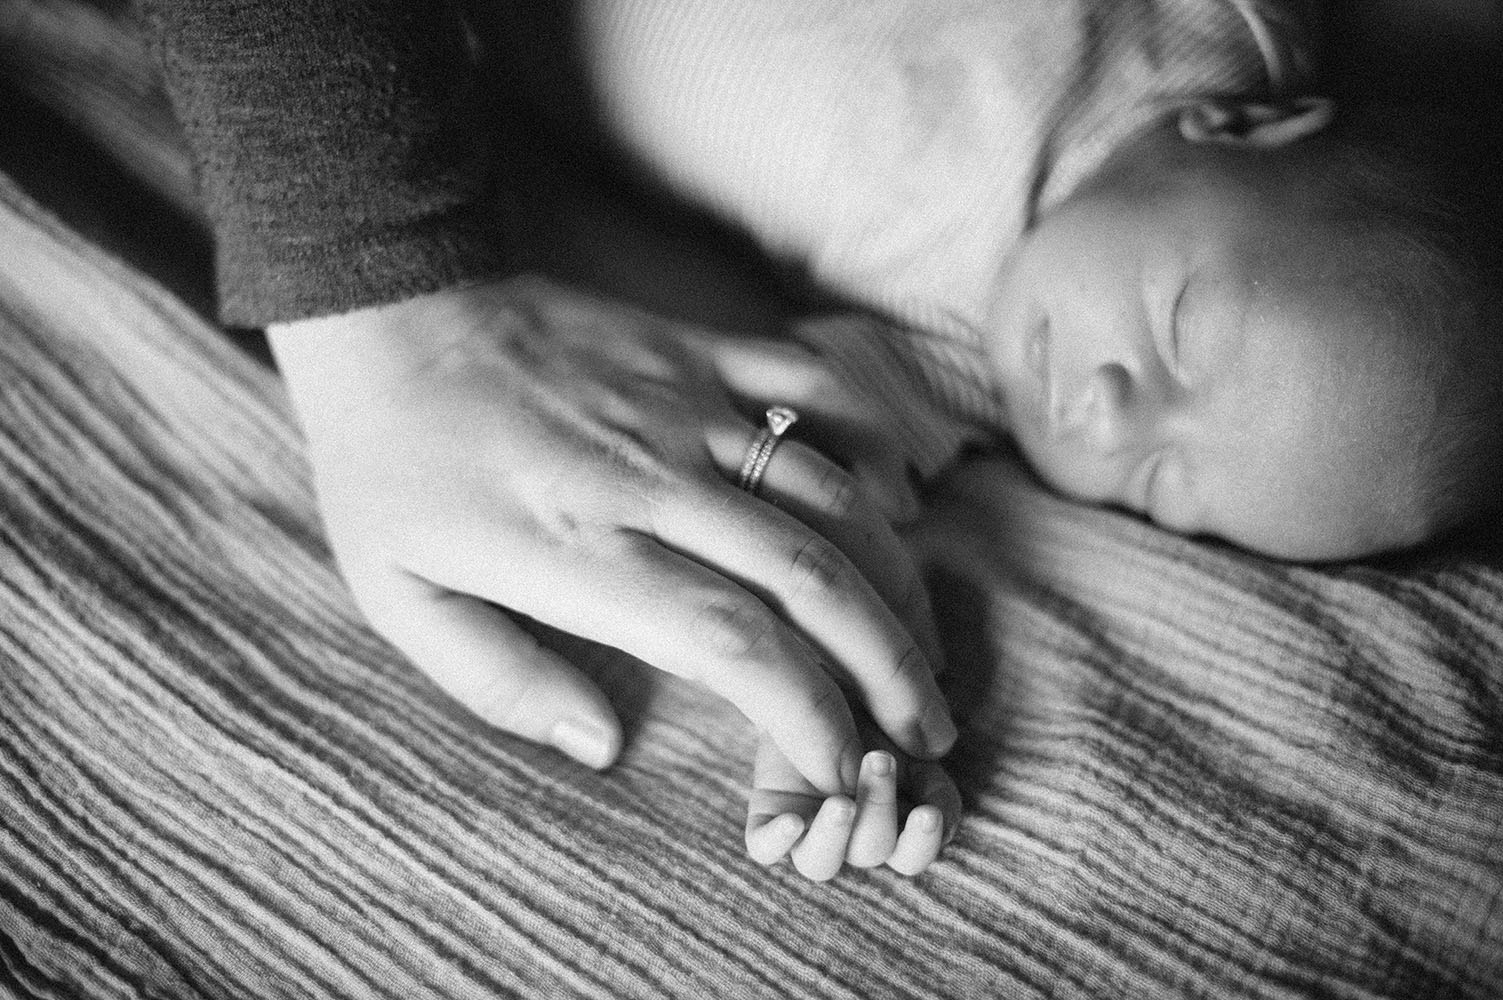 Newborn baby with moms hand wearing wedding ring